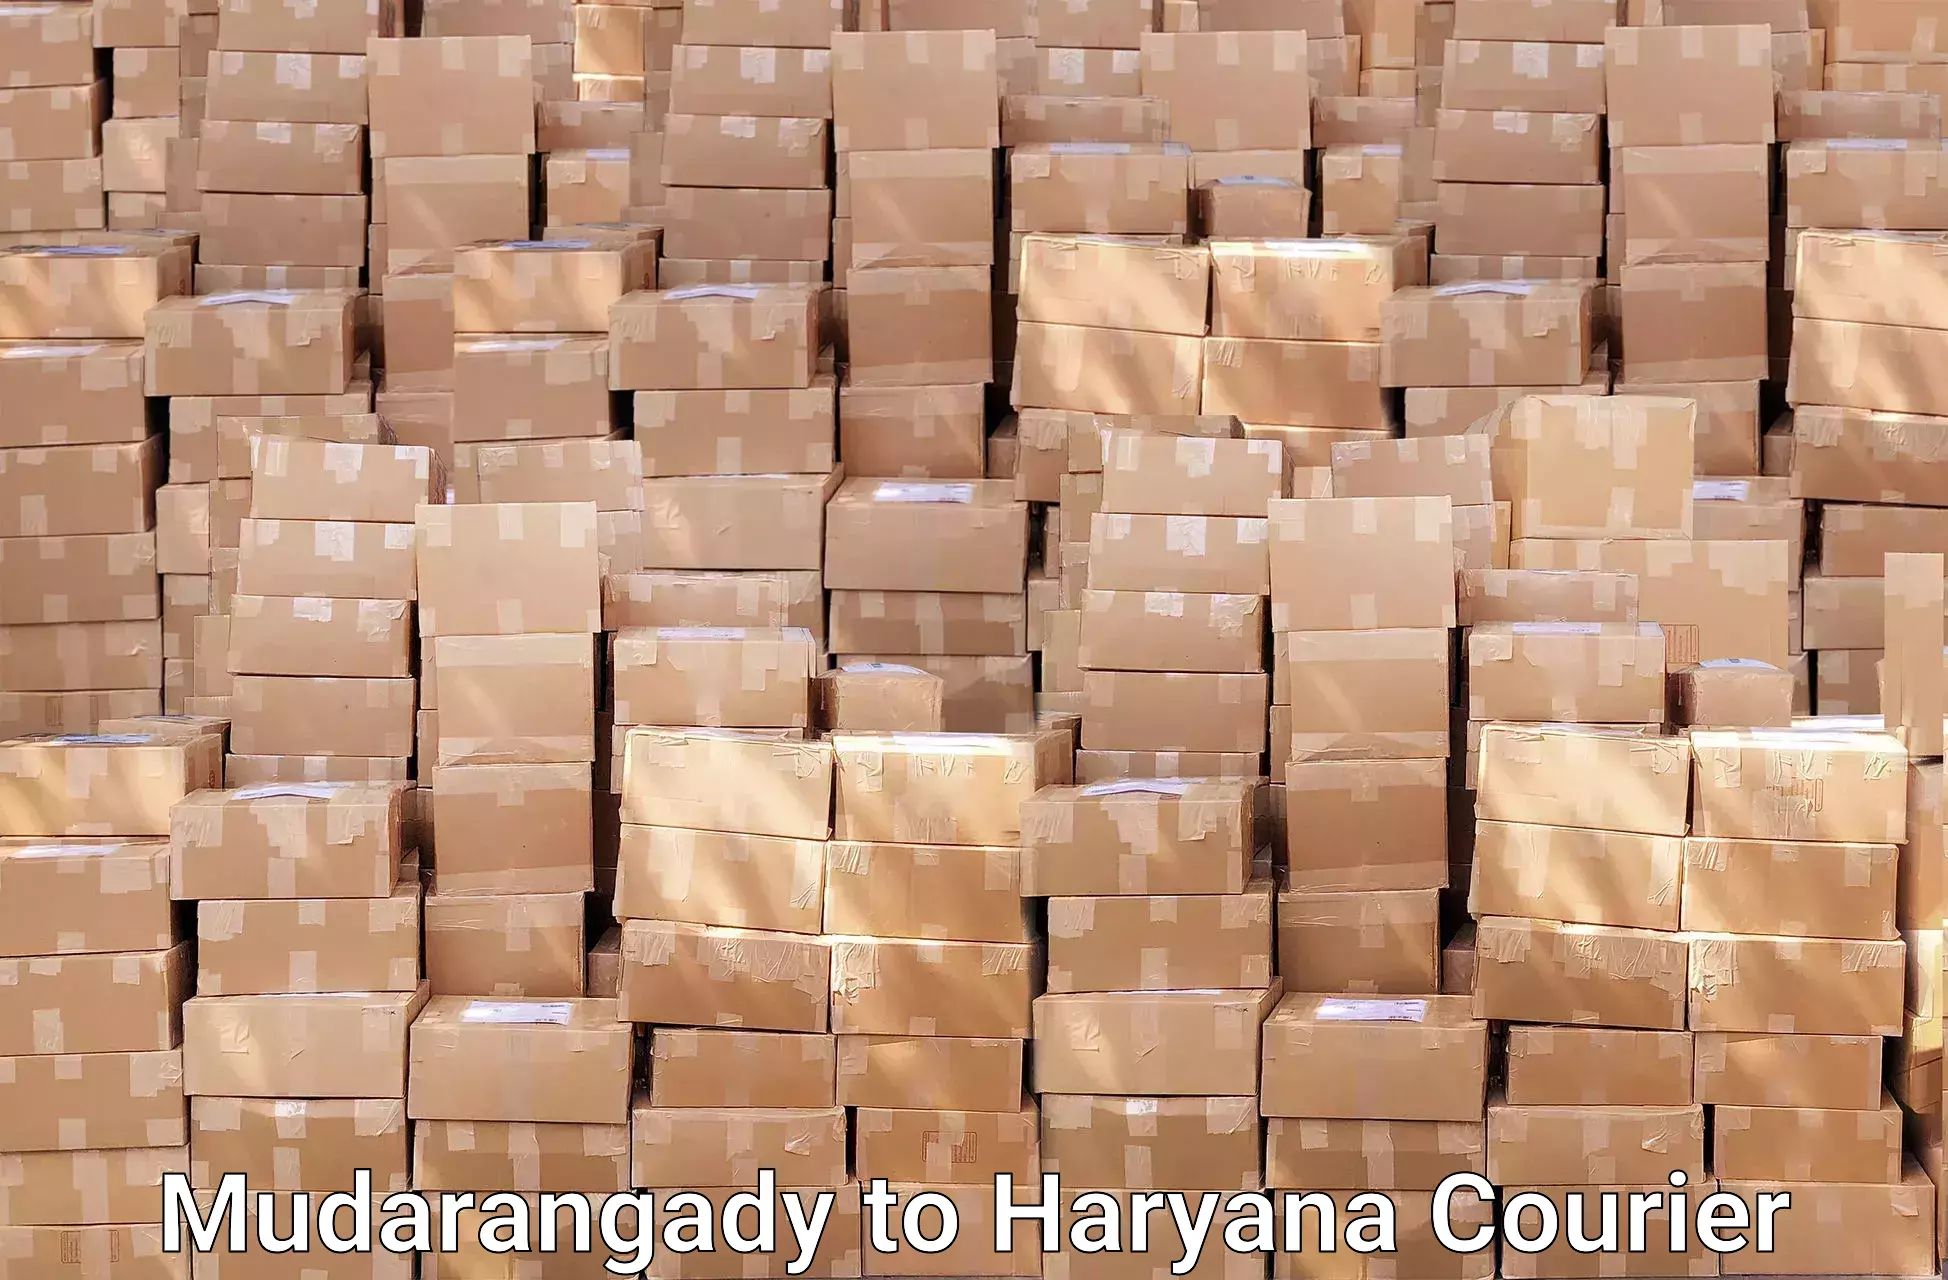 Moving and packing experts Mudarangady to Haryana